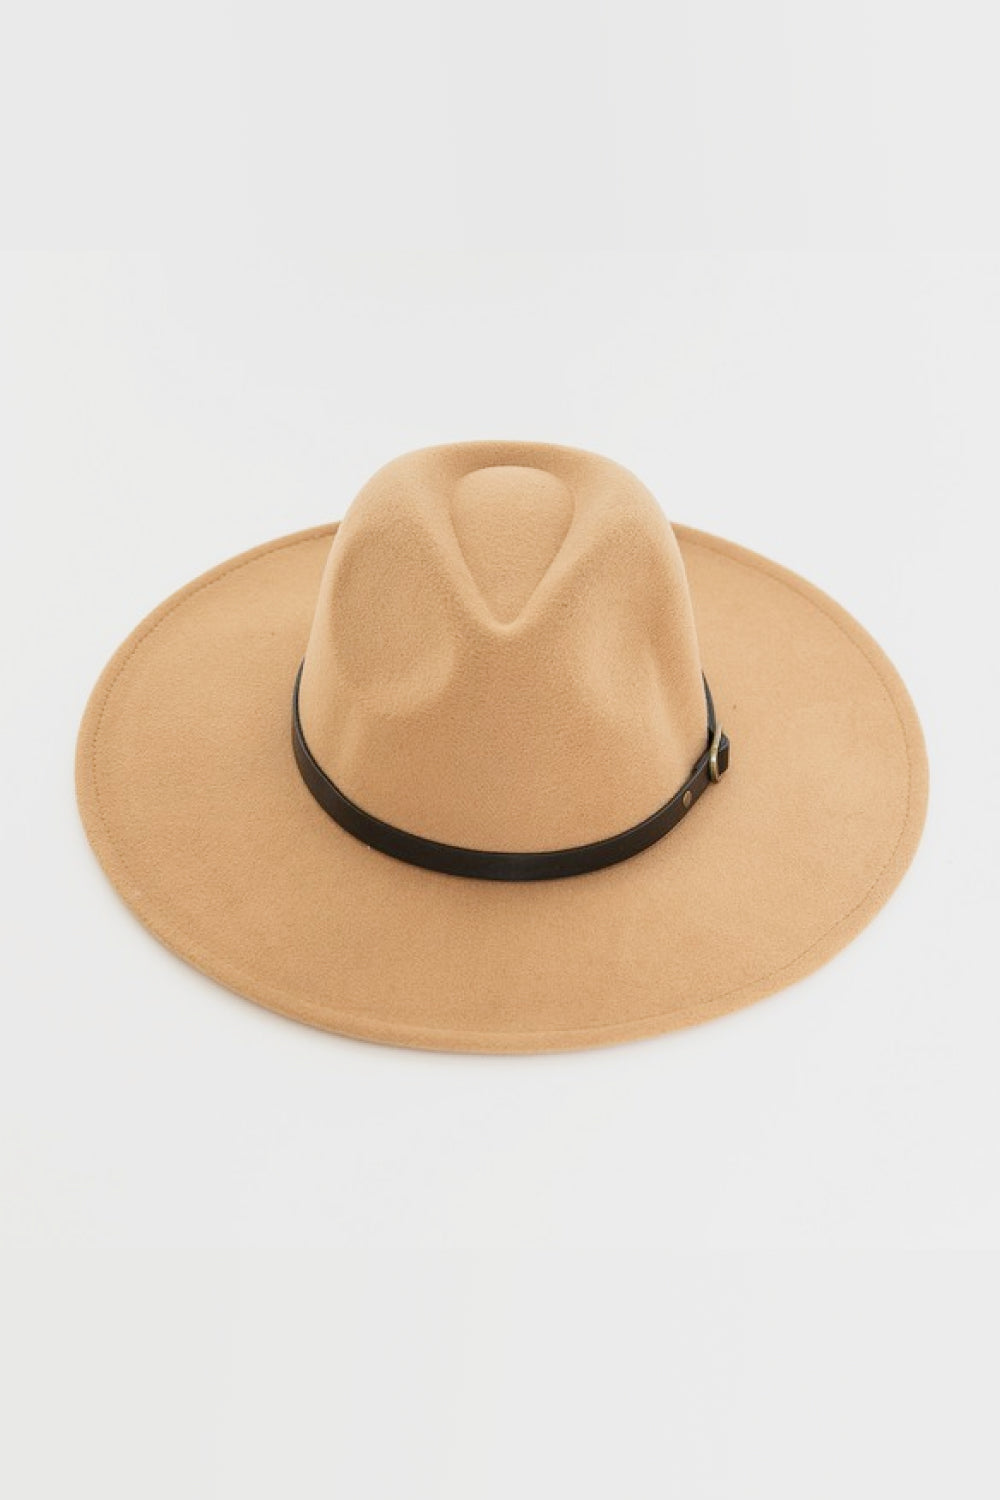 Faux Leather Tan hat